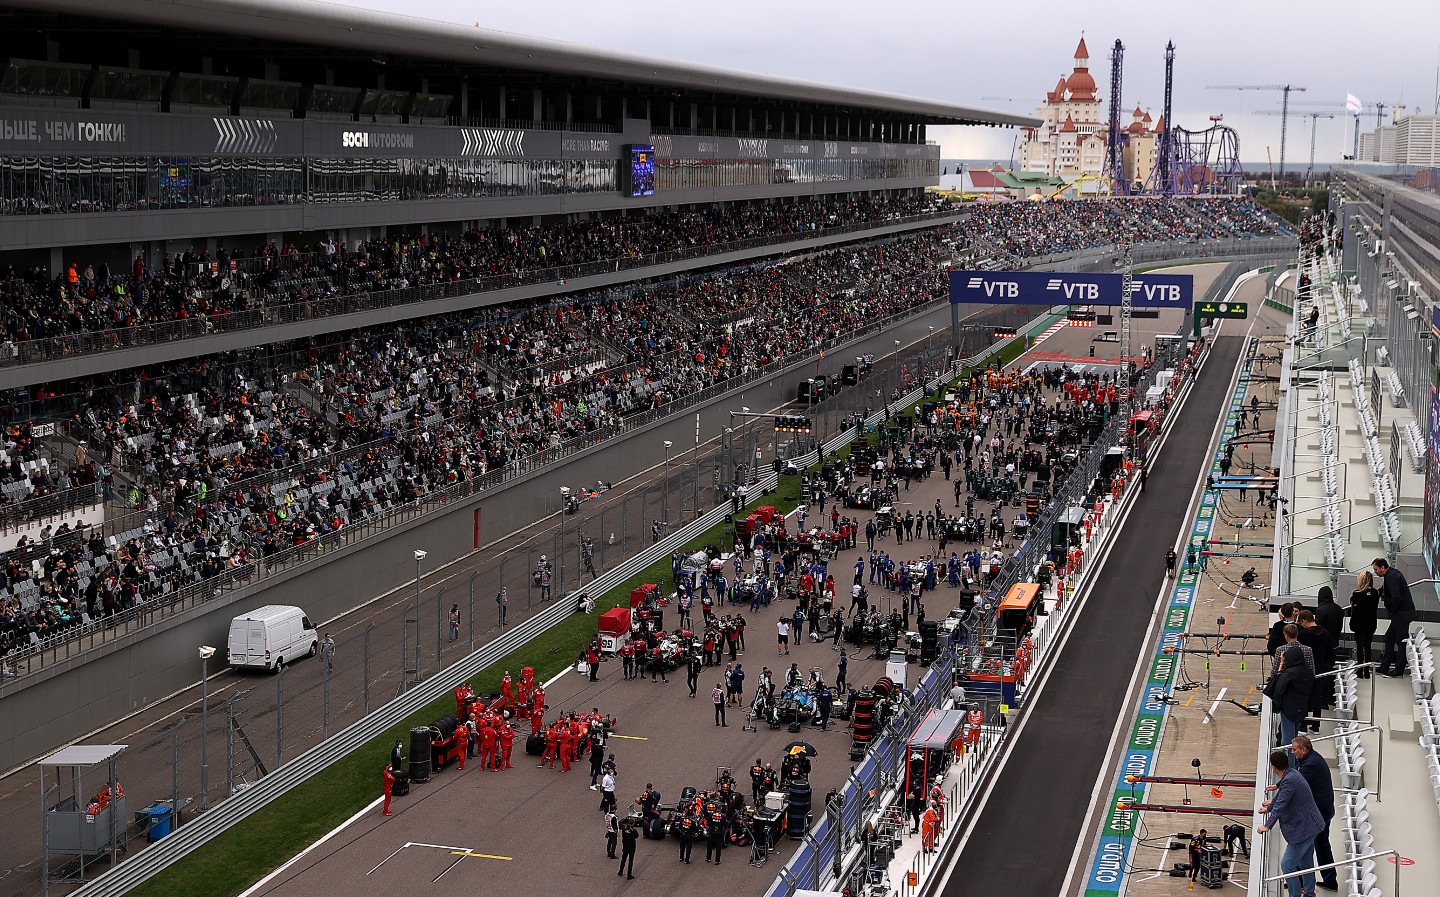 F1 cancels Russian Grand Prix after Ukraine invasion